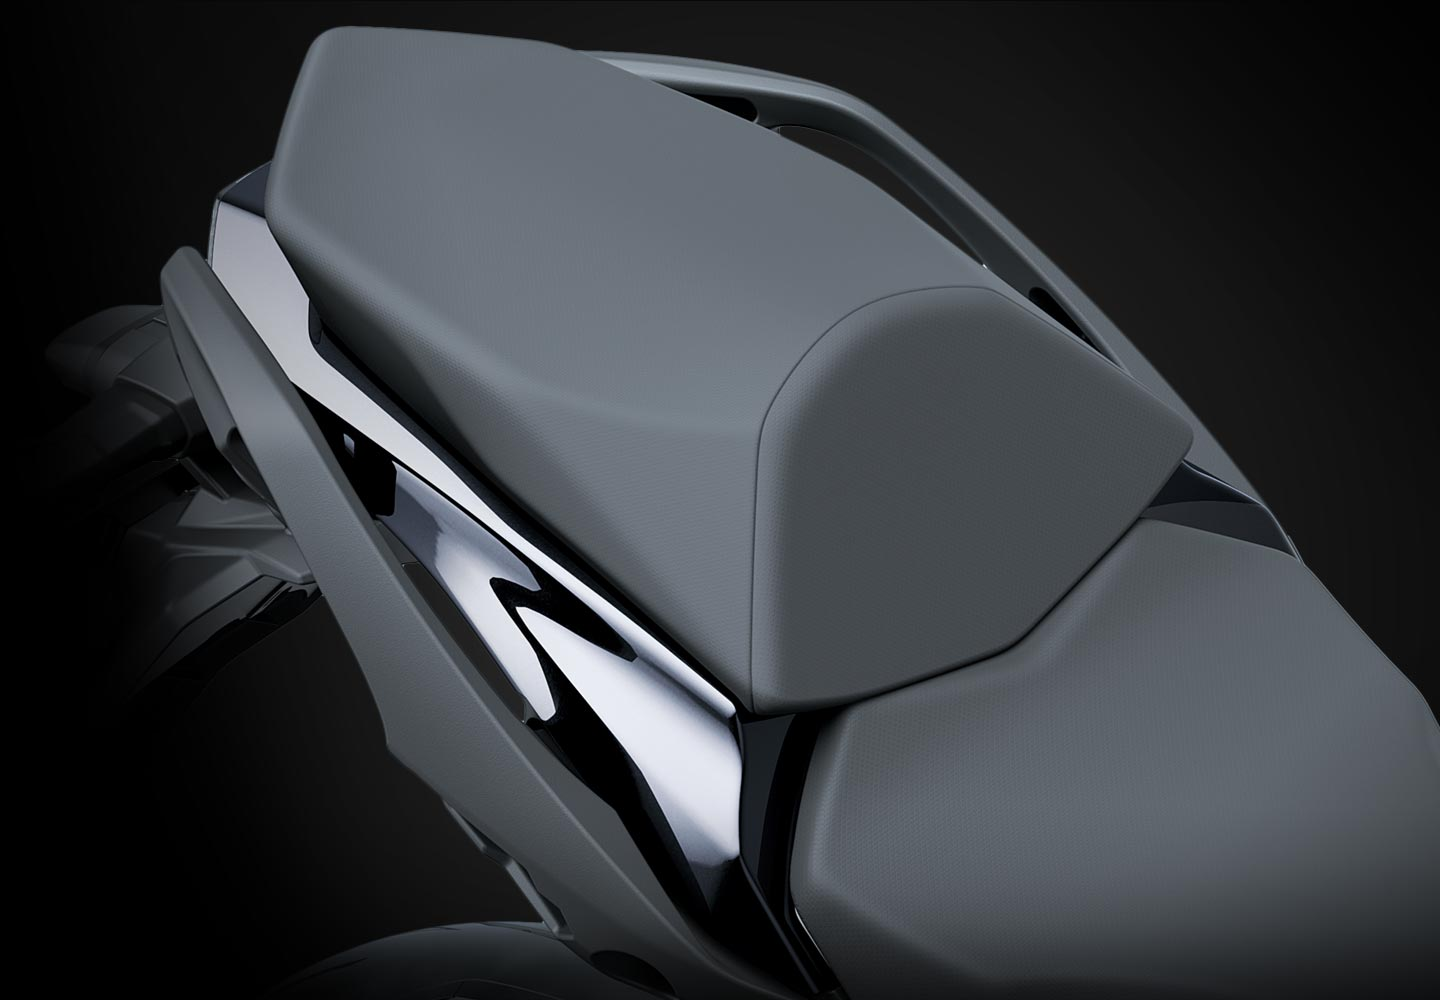 Kawasaki Ninja® 1000SX | Touring Motorcycle | Powerful & Capable